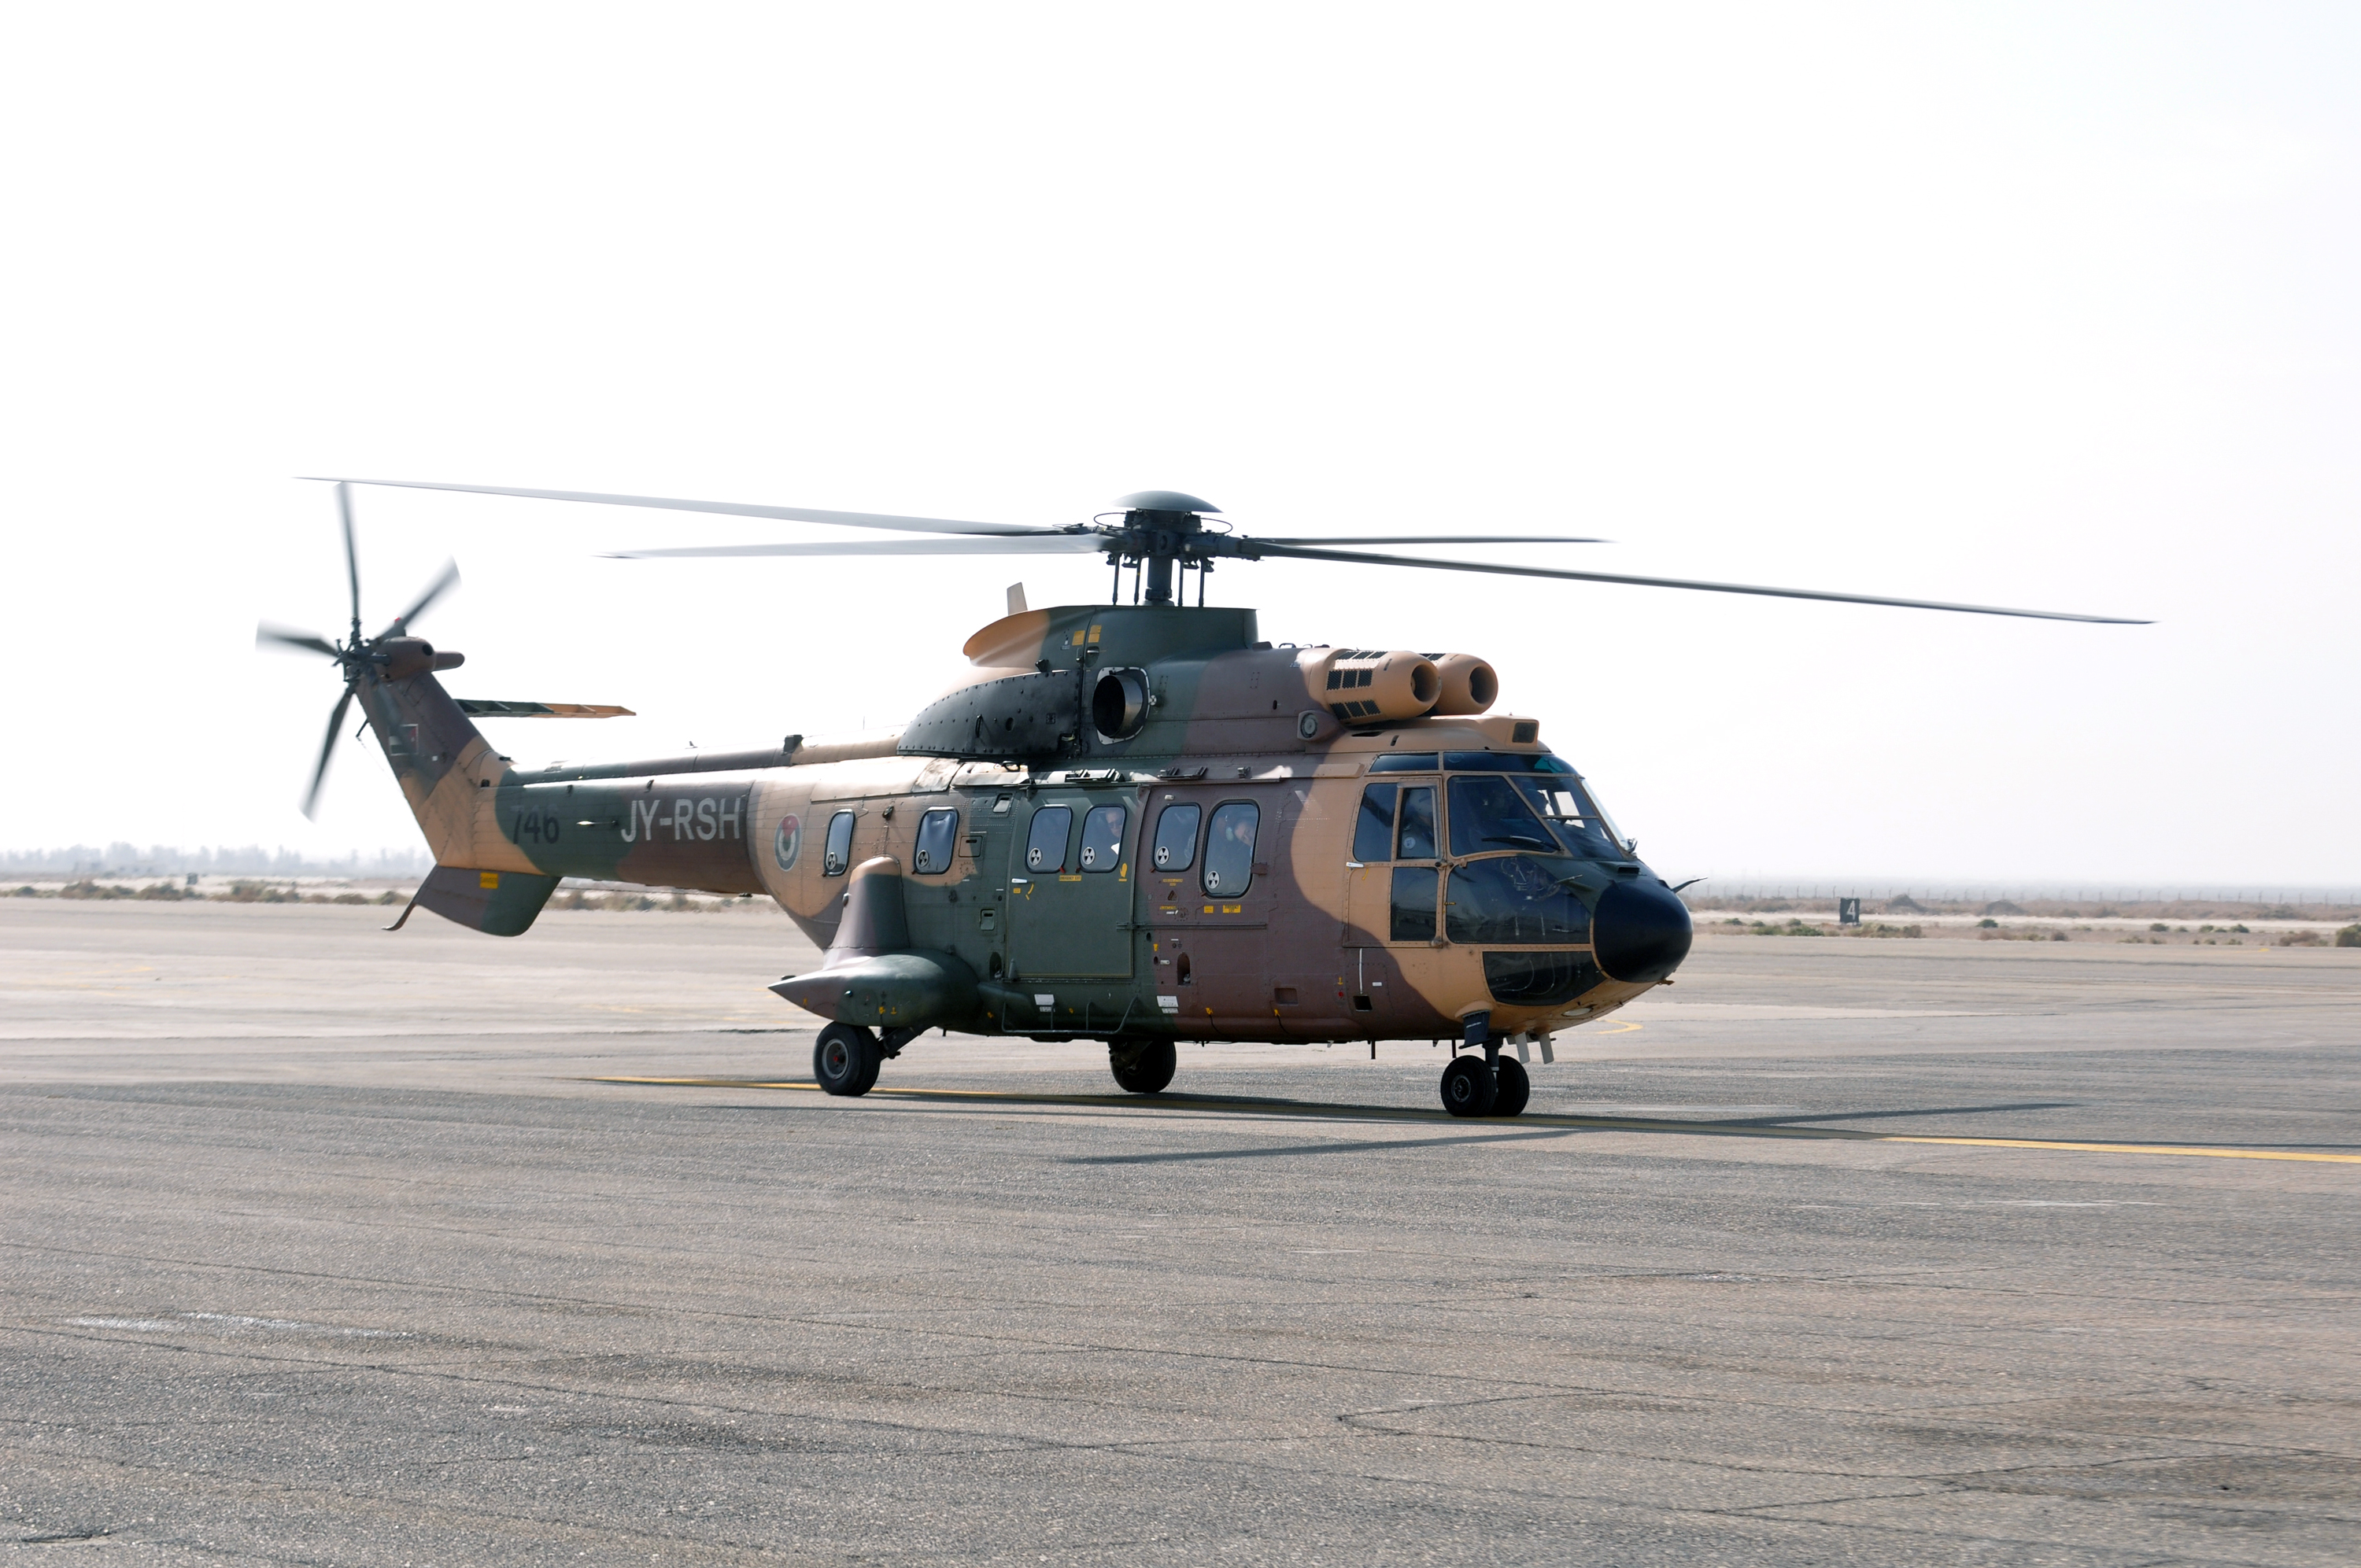 Royal_Jordanian_Air_Force_helicopter.jpg